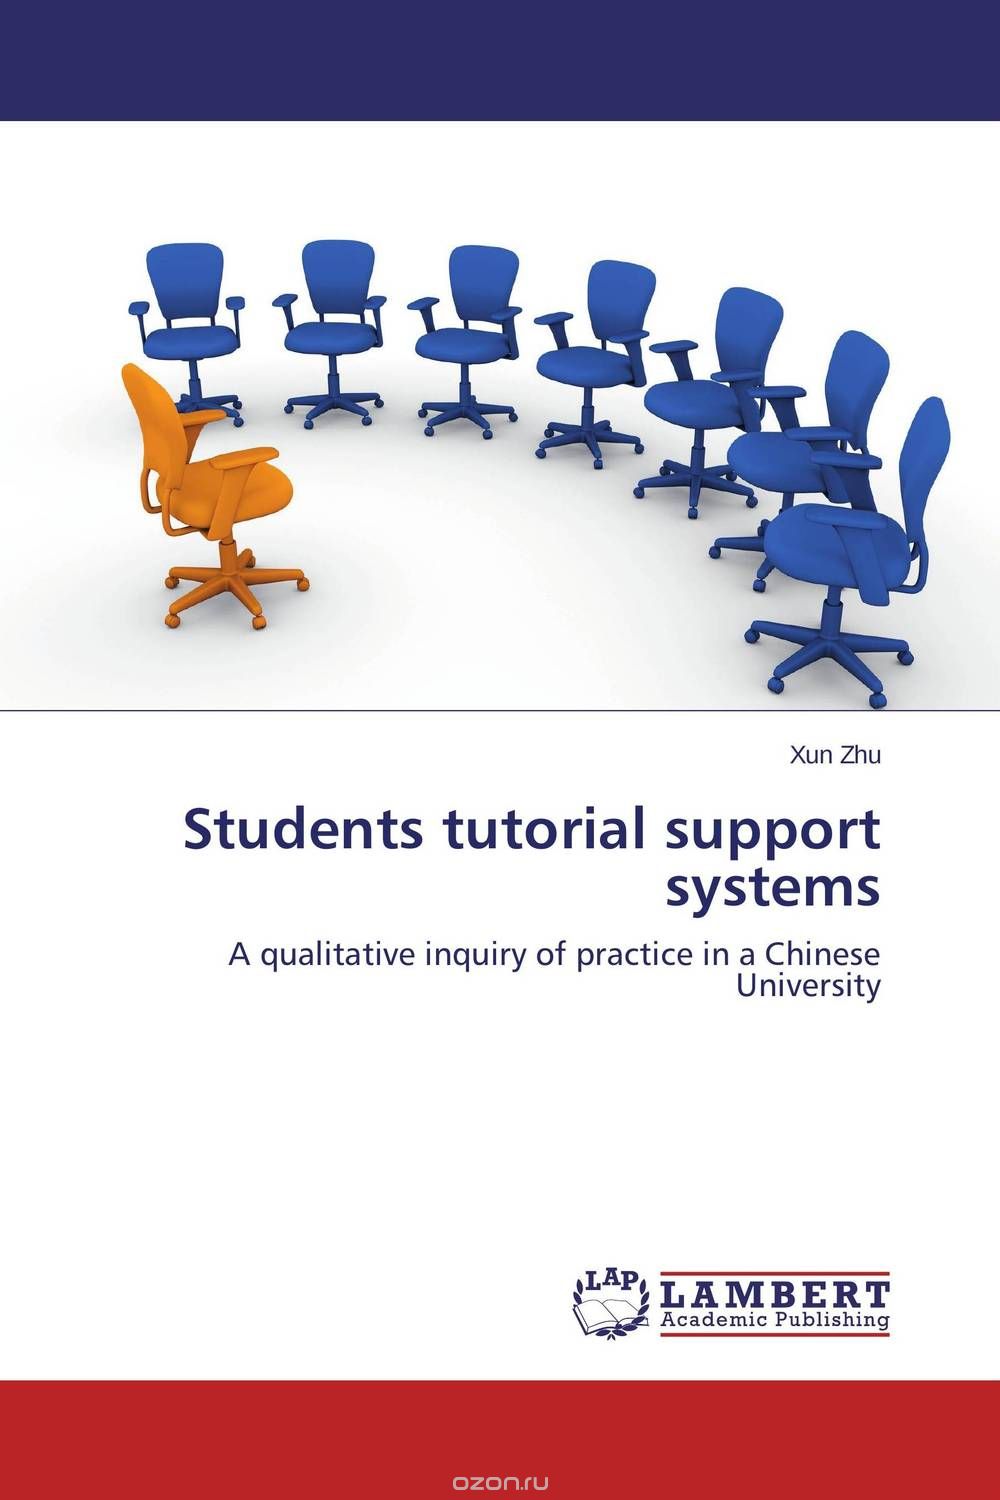 Скачать книгу "Students tutorial support systems"